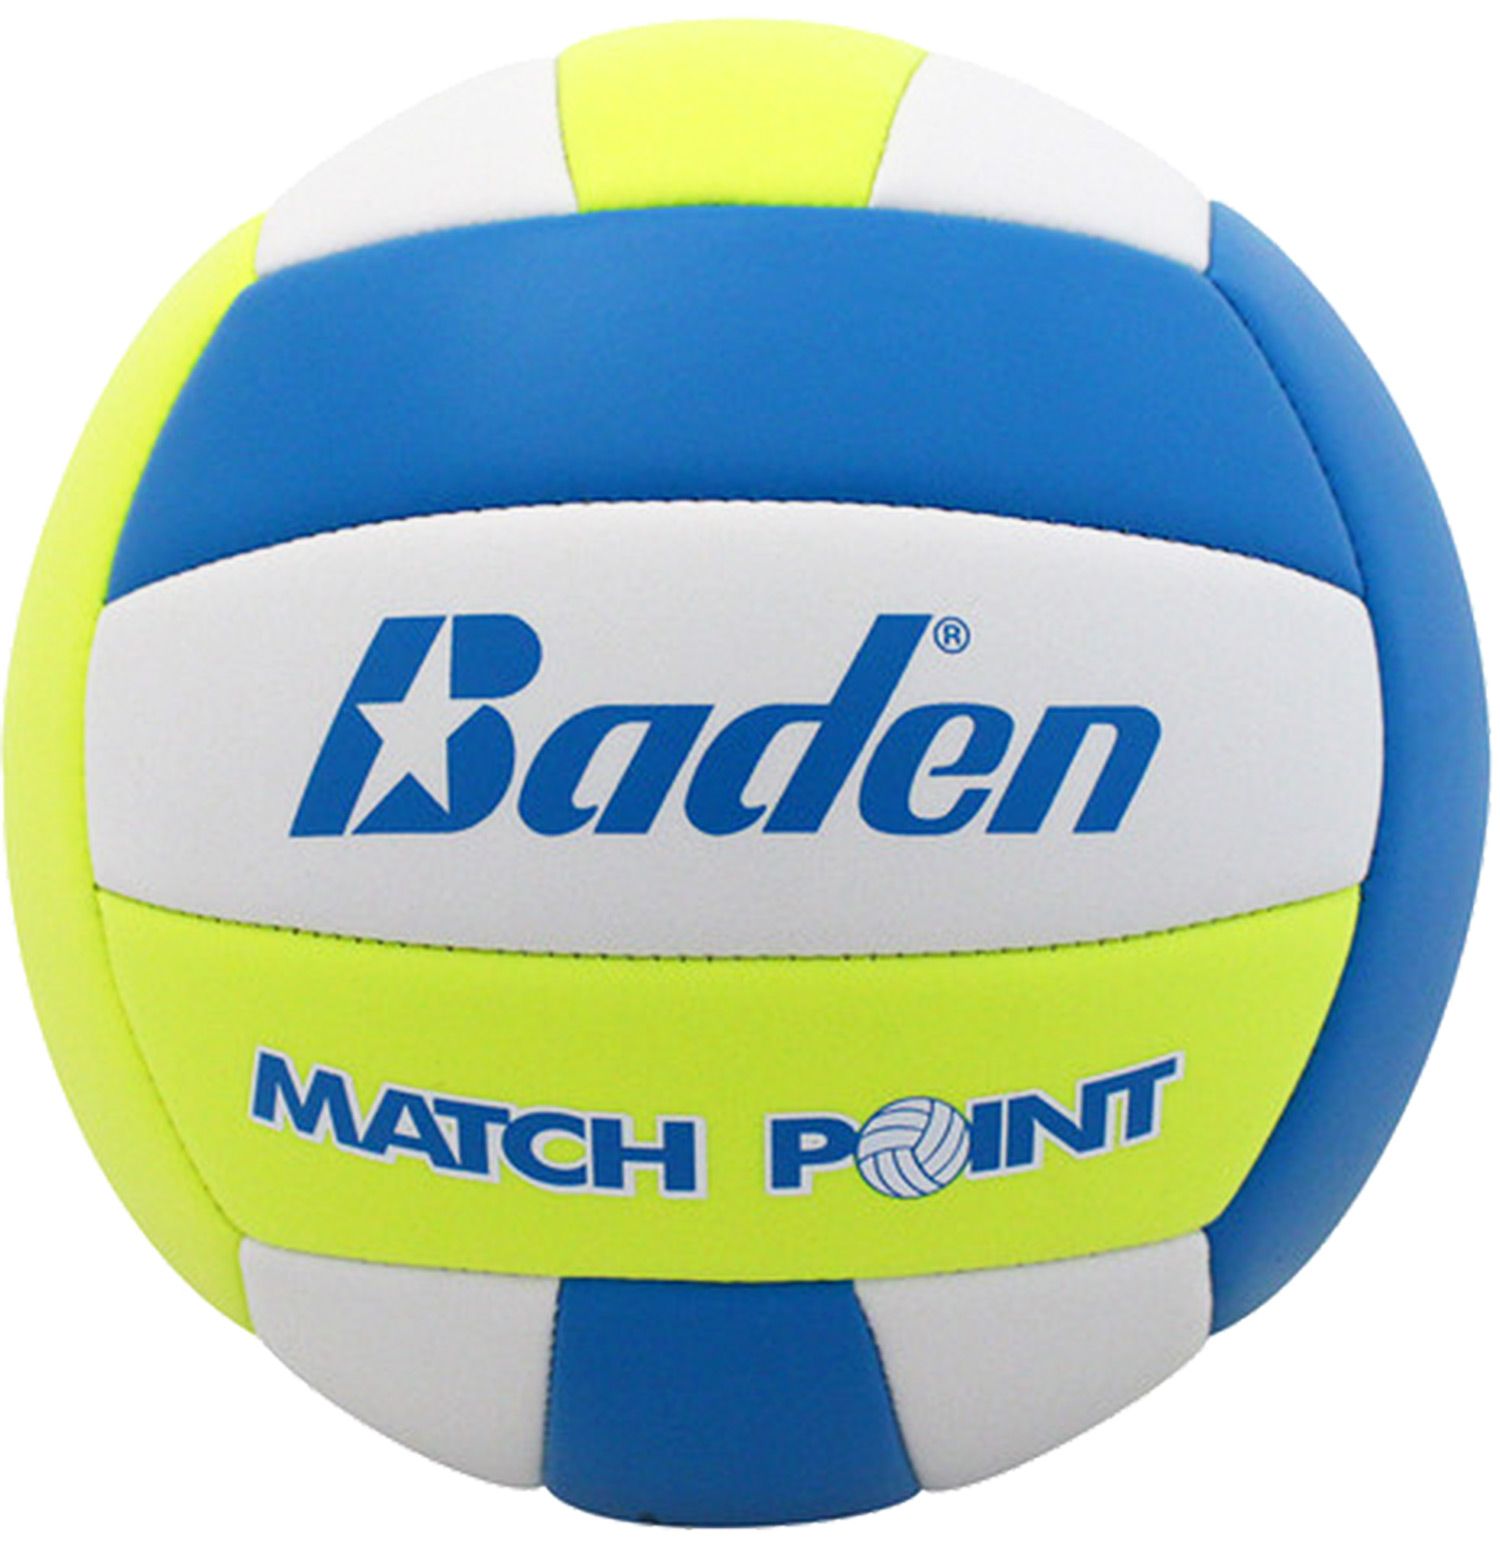 Baden Match Point Neon Recreational Outdoor Volleyball